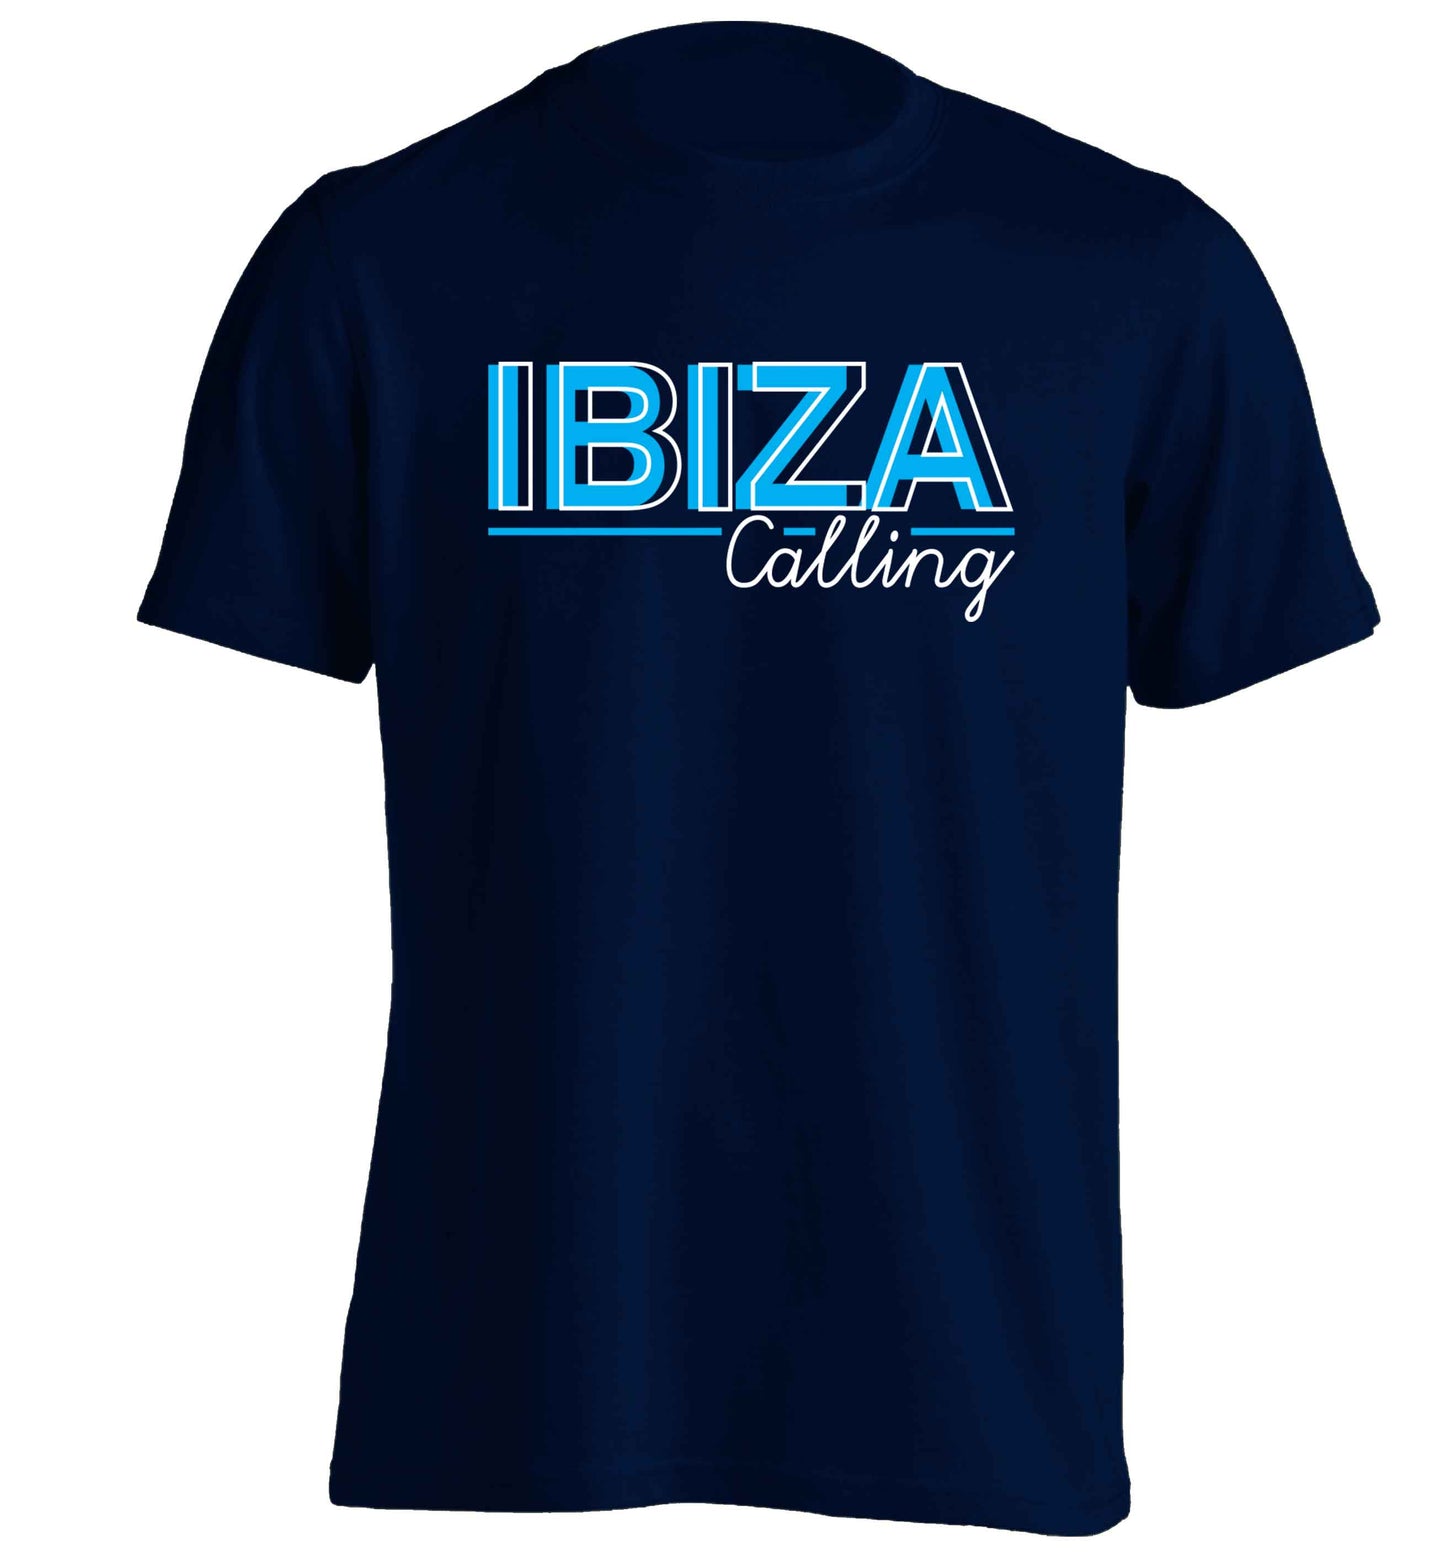 Ibiza calling adults unisex navy Tshirt 2XL